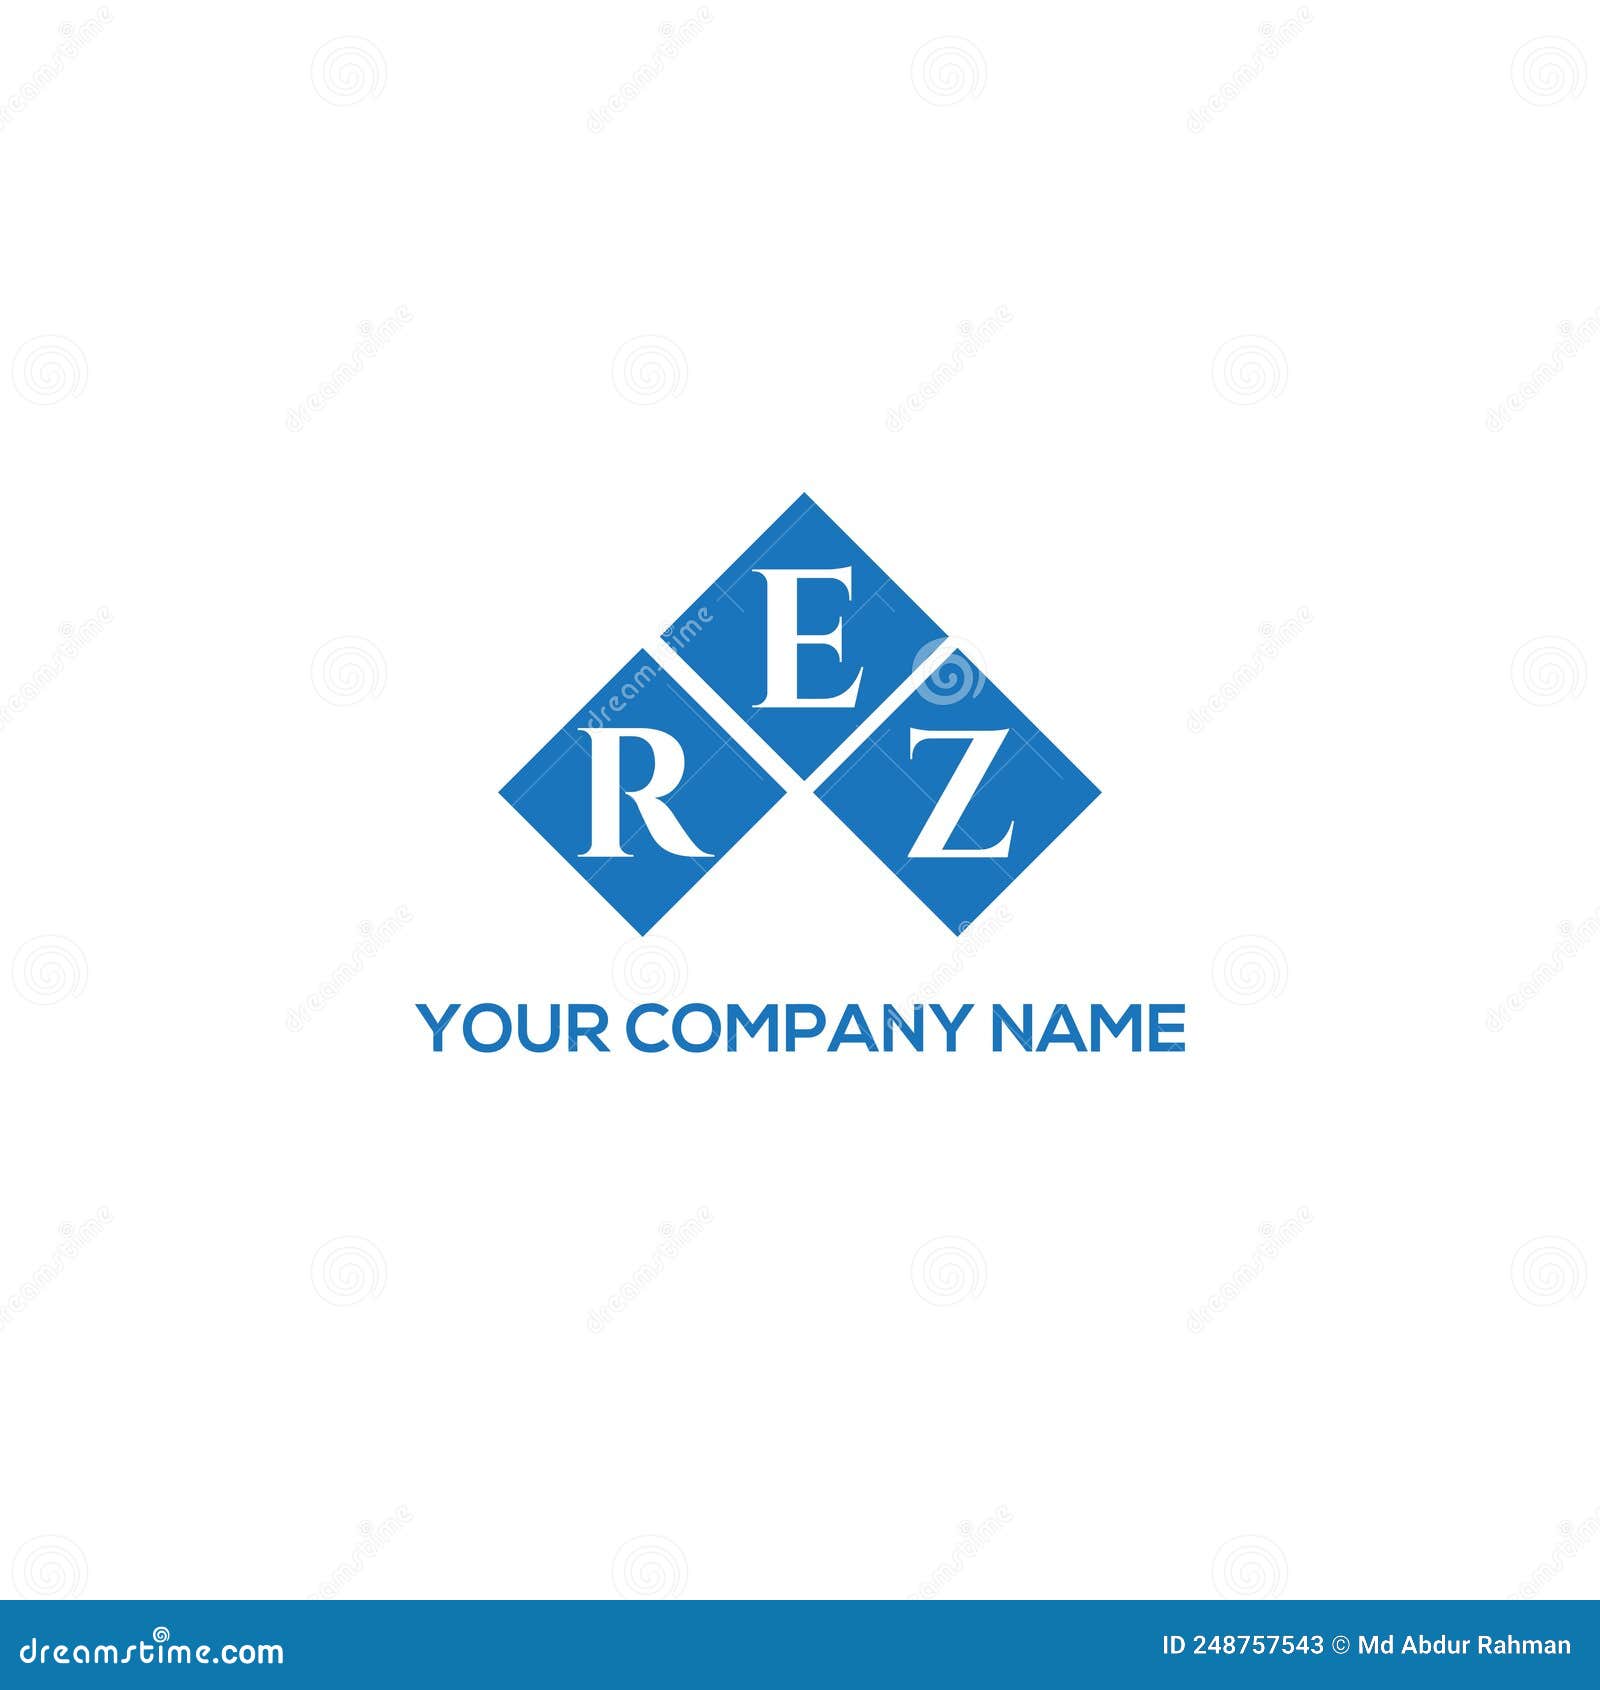 rez letter logo  on black background. rez creative initials letter logo concept. rez letter .rez letter logo  on